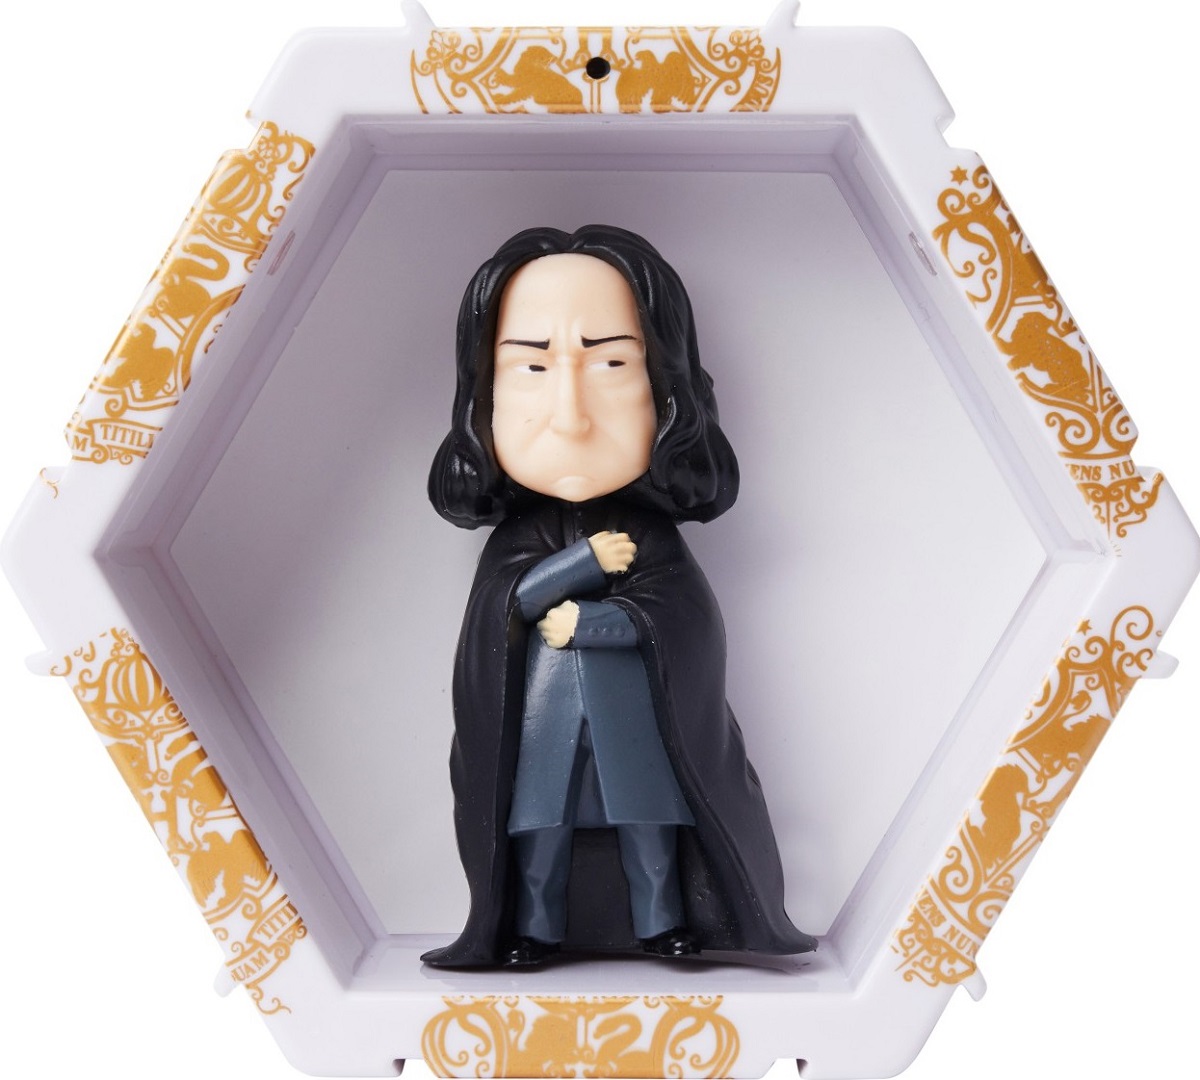 Figurina WOW! PODS: Wizarding World. Snape